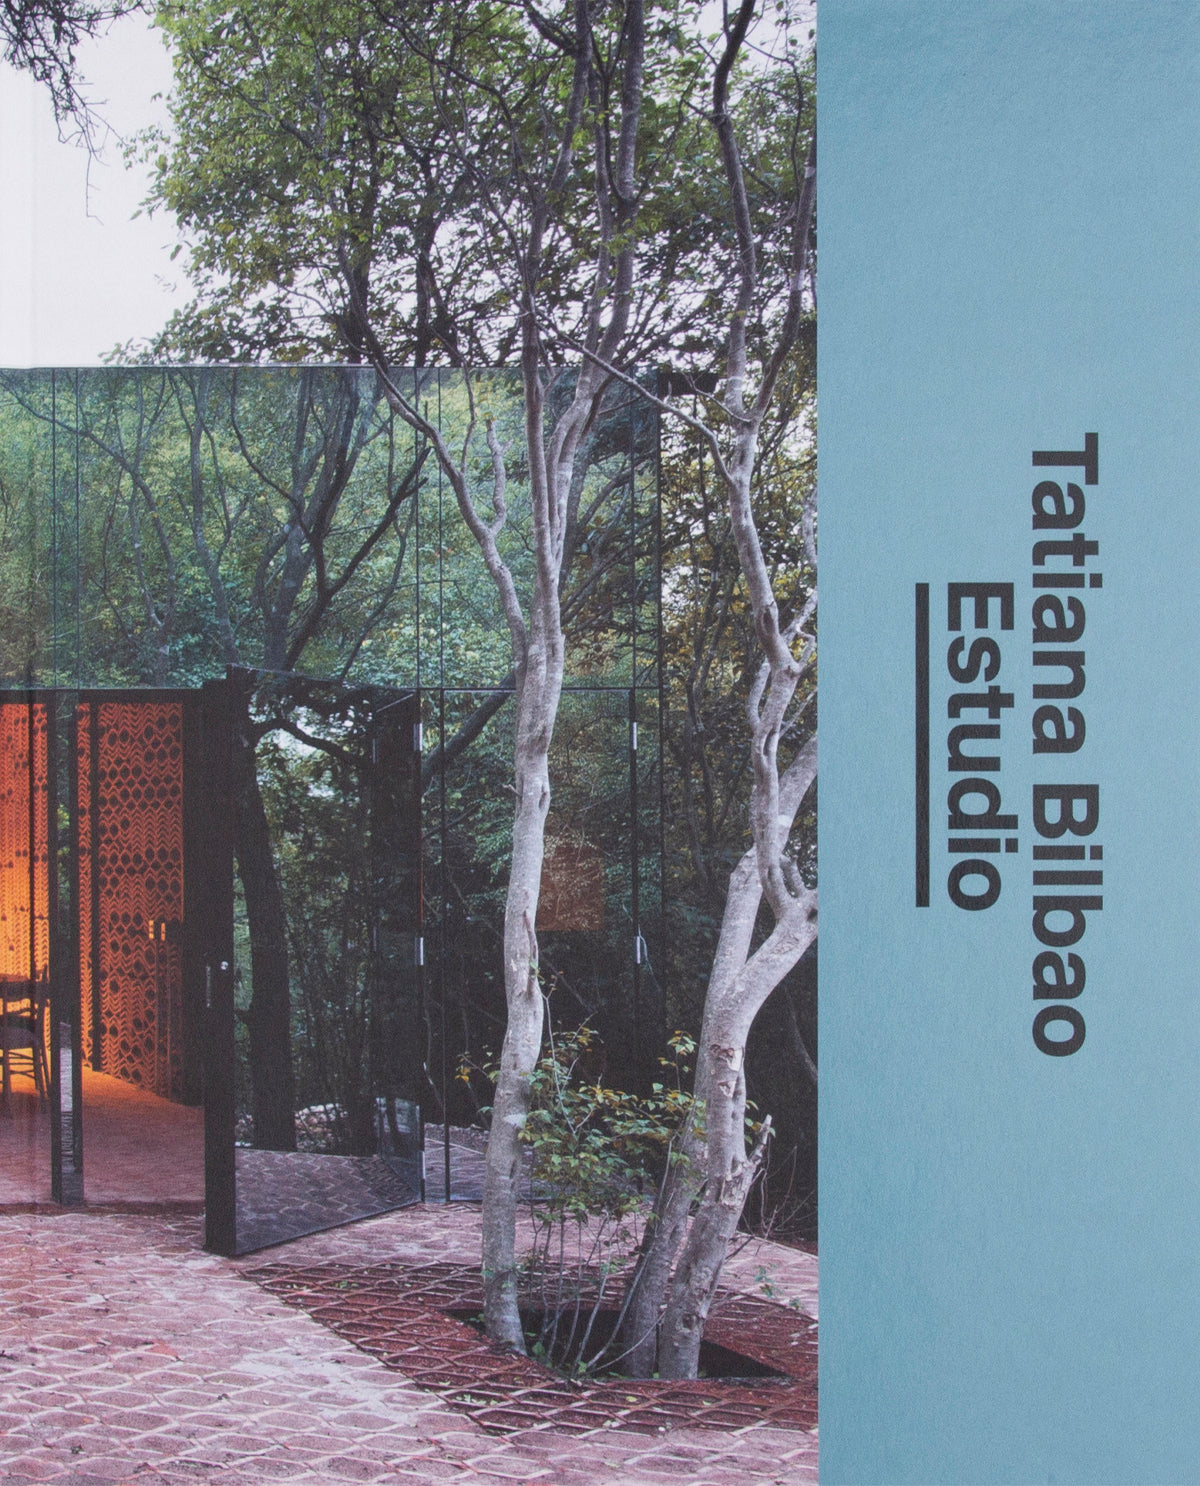 The Architect's Studio: Tatiana Bilbao Estudio